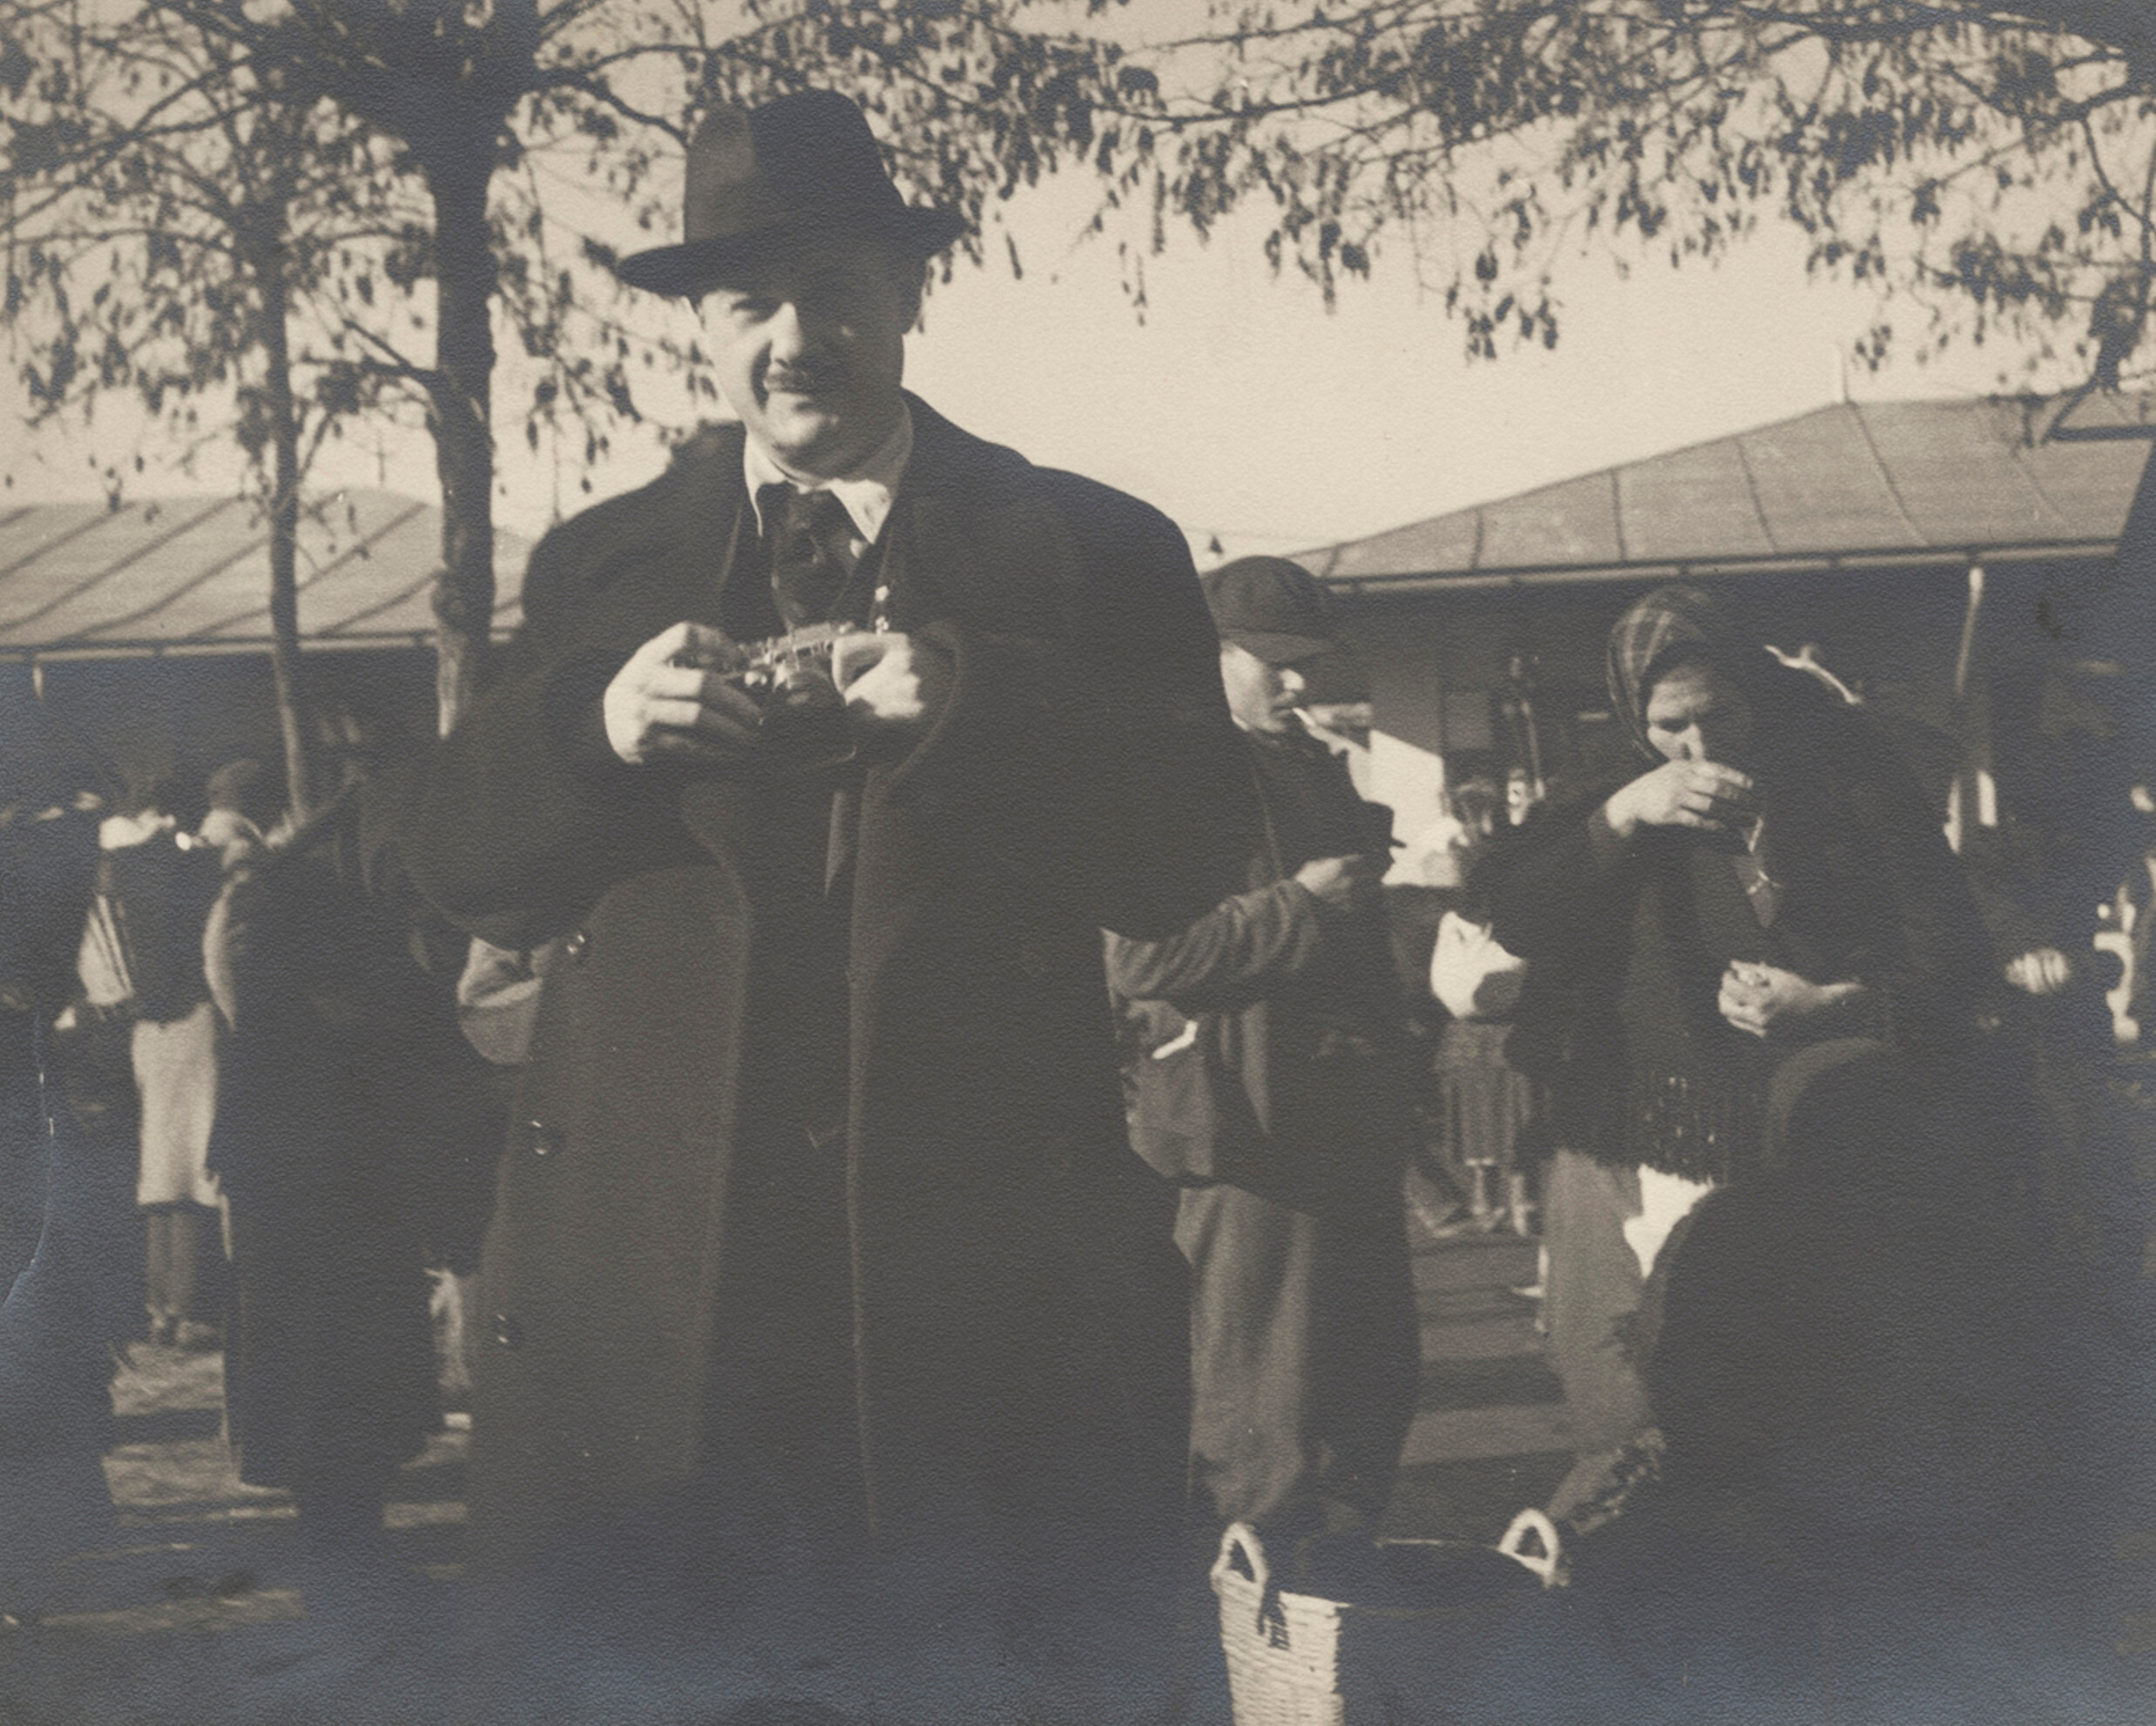 Роман Вишняк со своей камерой Leica, Мукачево, 1937 г. Фотограф Роман Вишняк